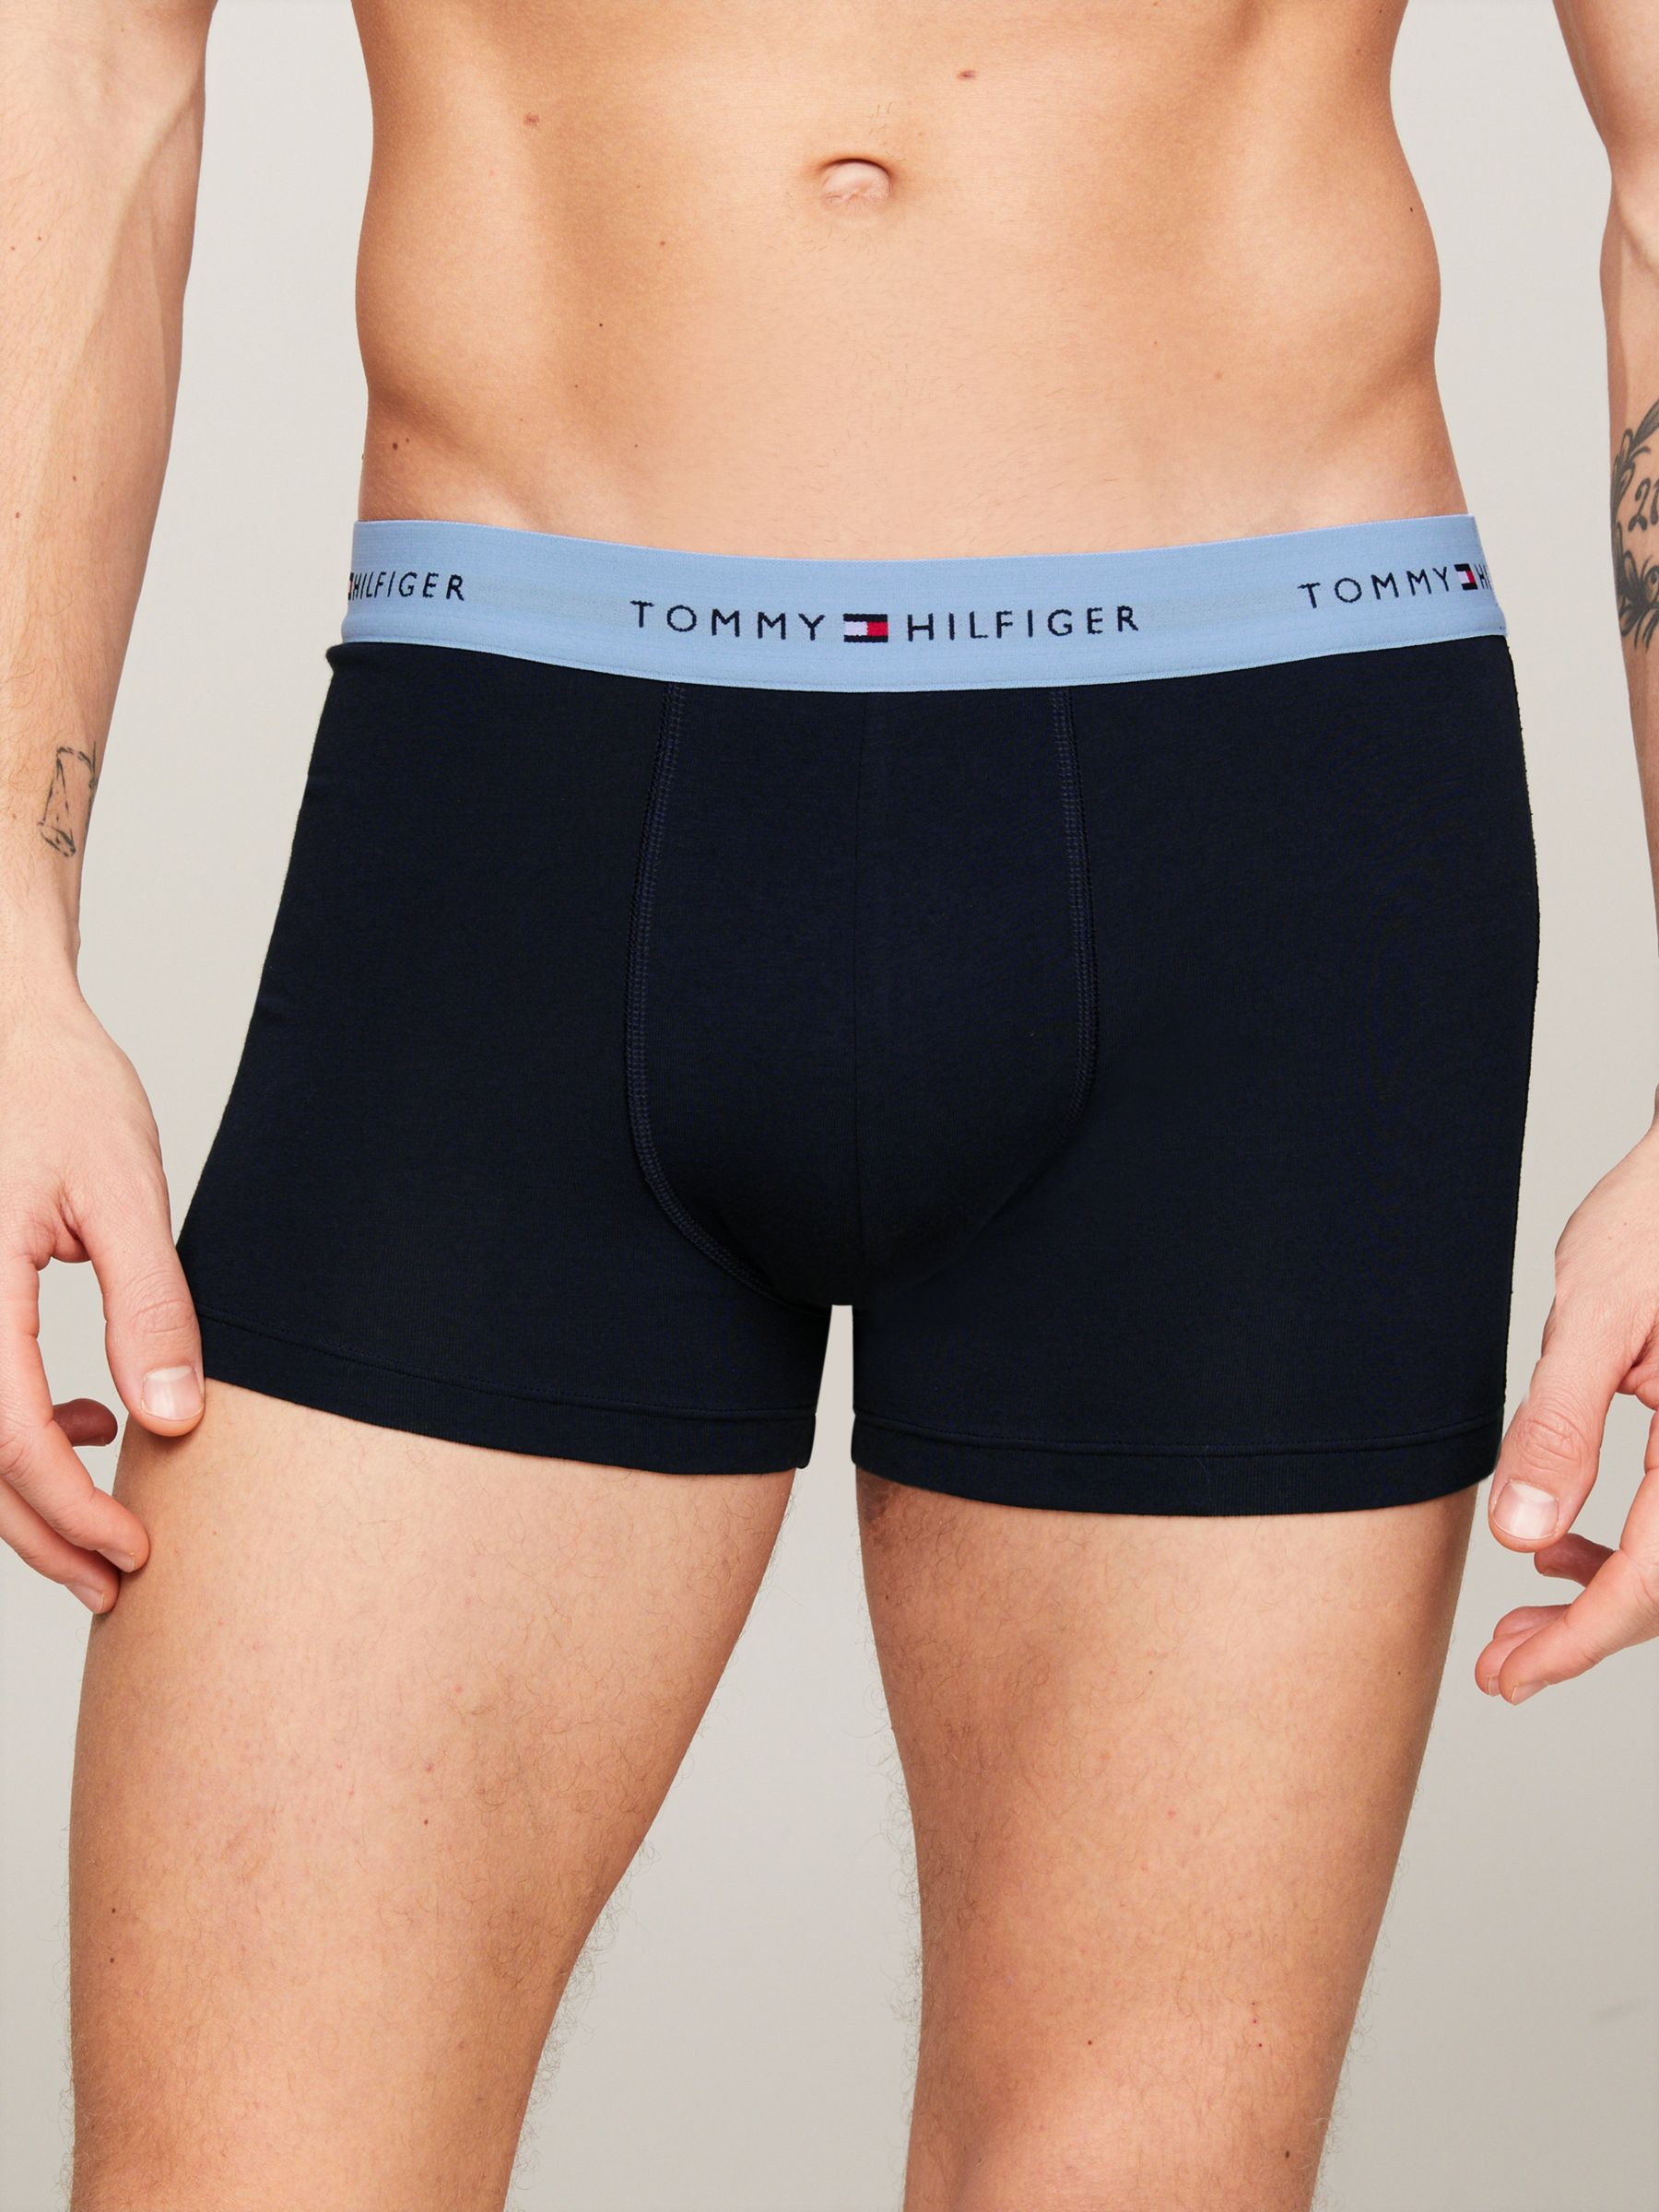 Tommy Hilfiger Logo Waist Cotton Stretch Trunks, Pack of 5, Black/Multi, L